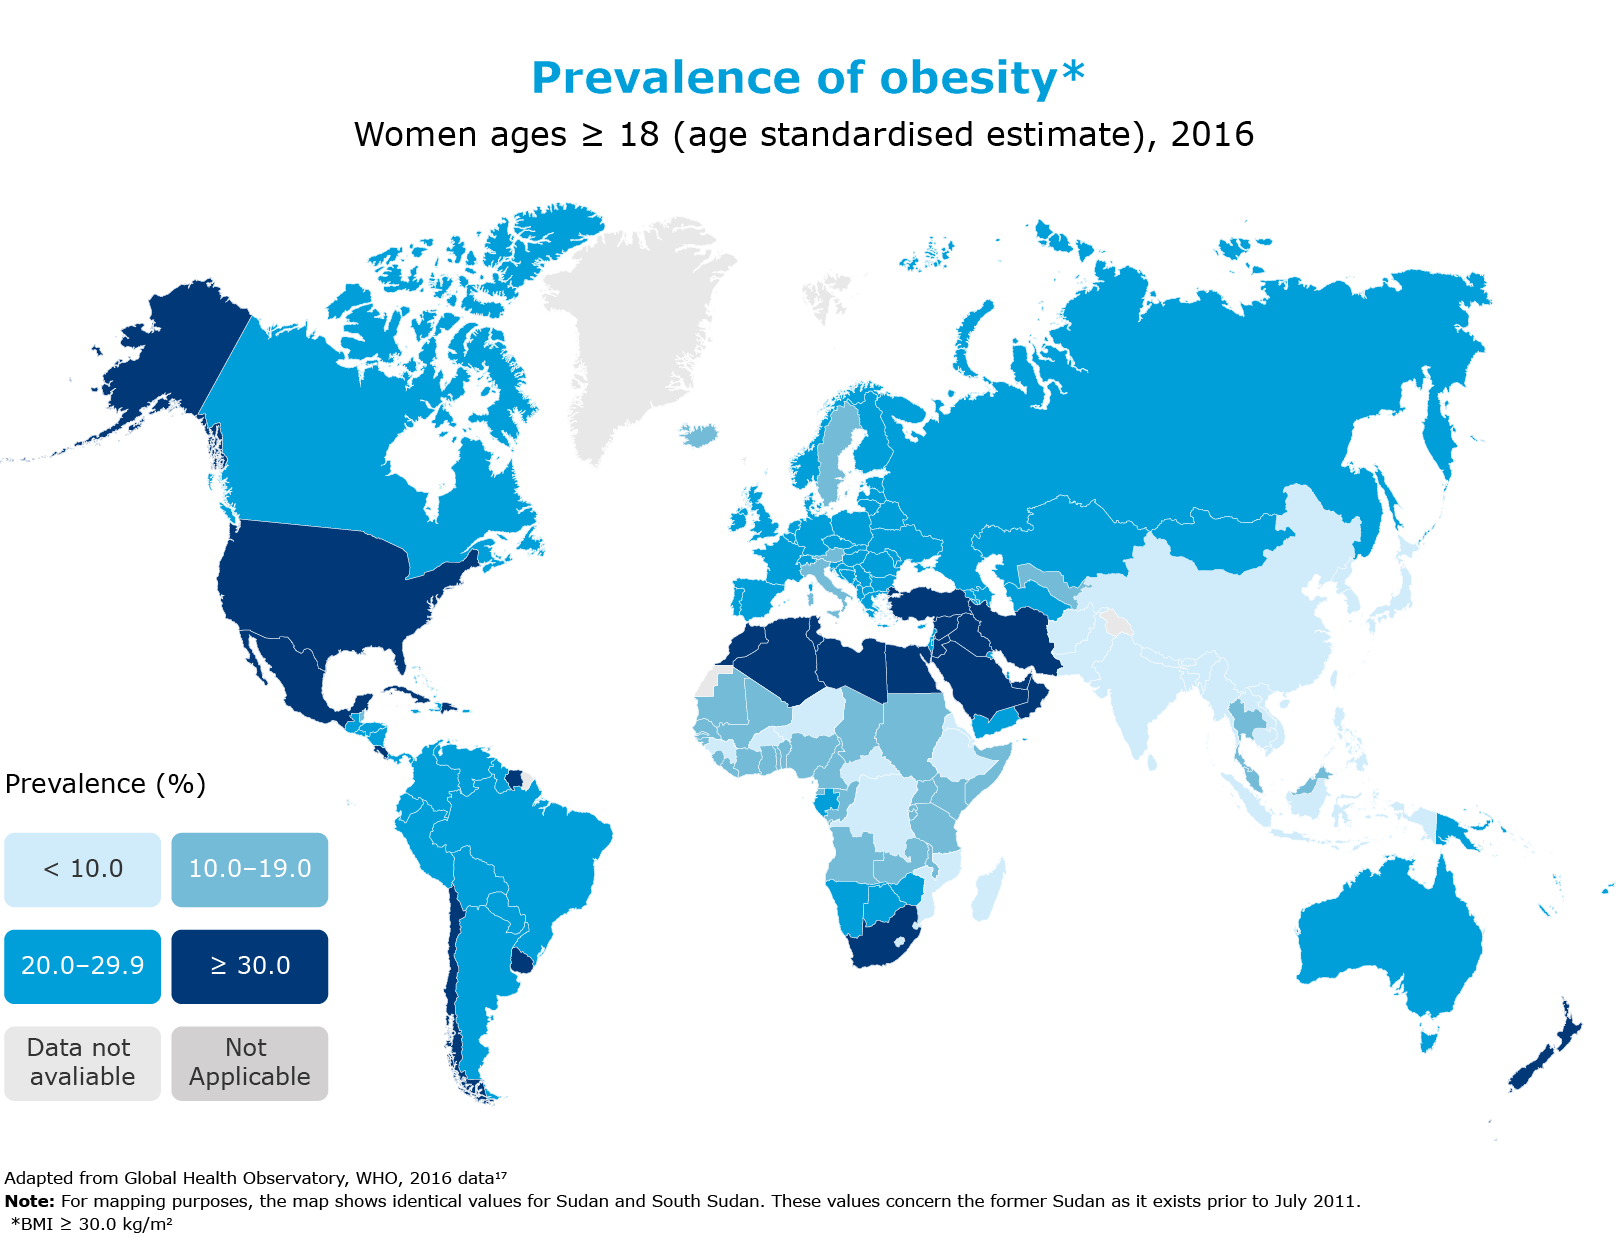 prevalence of obesity among women, >18, 2016